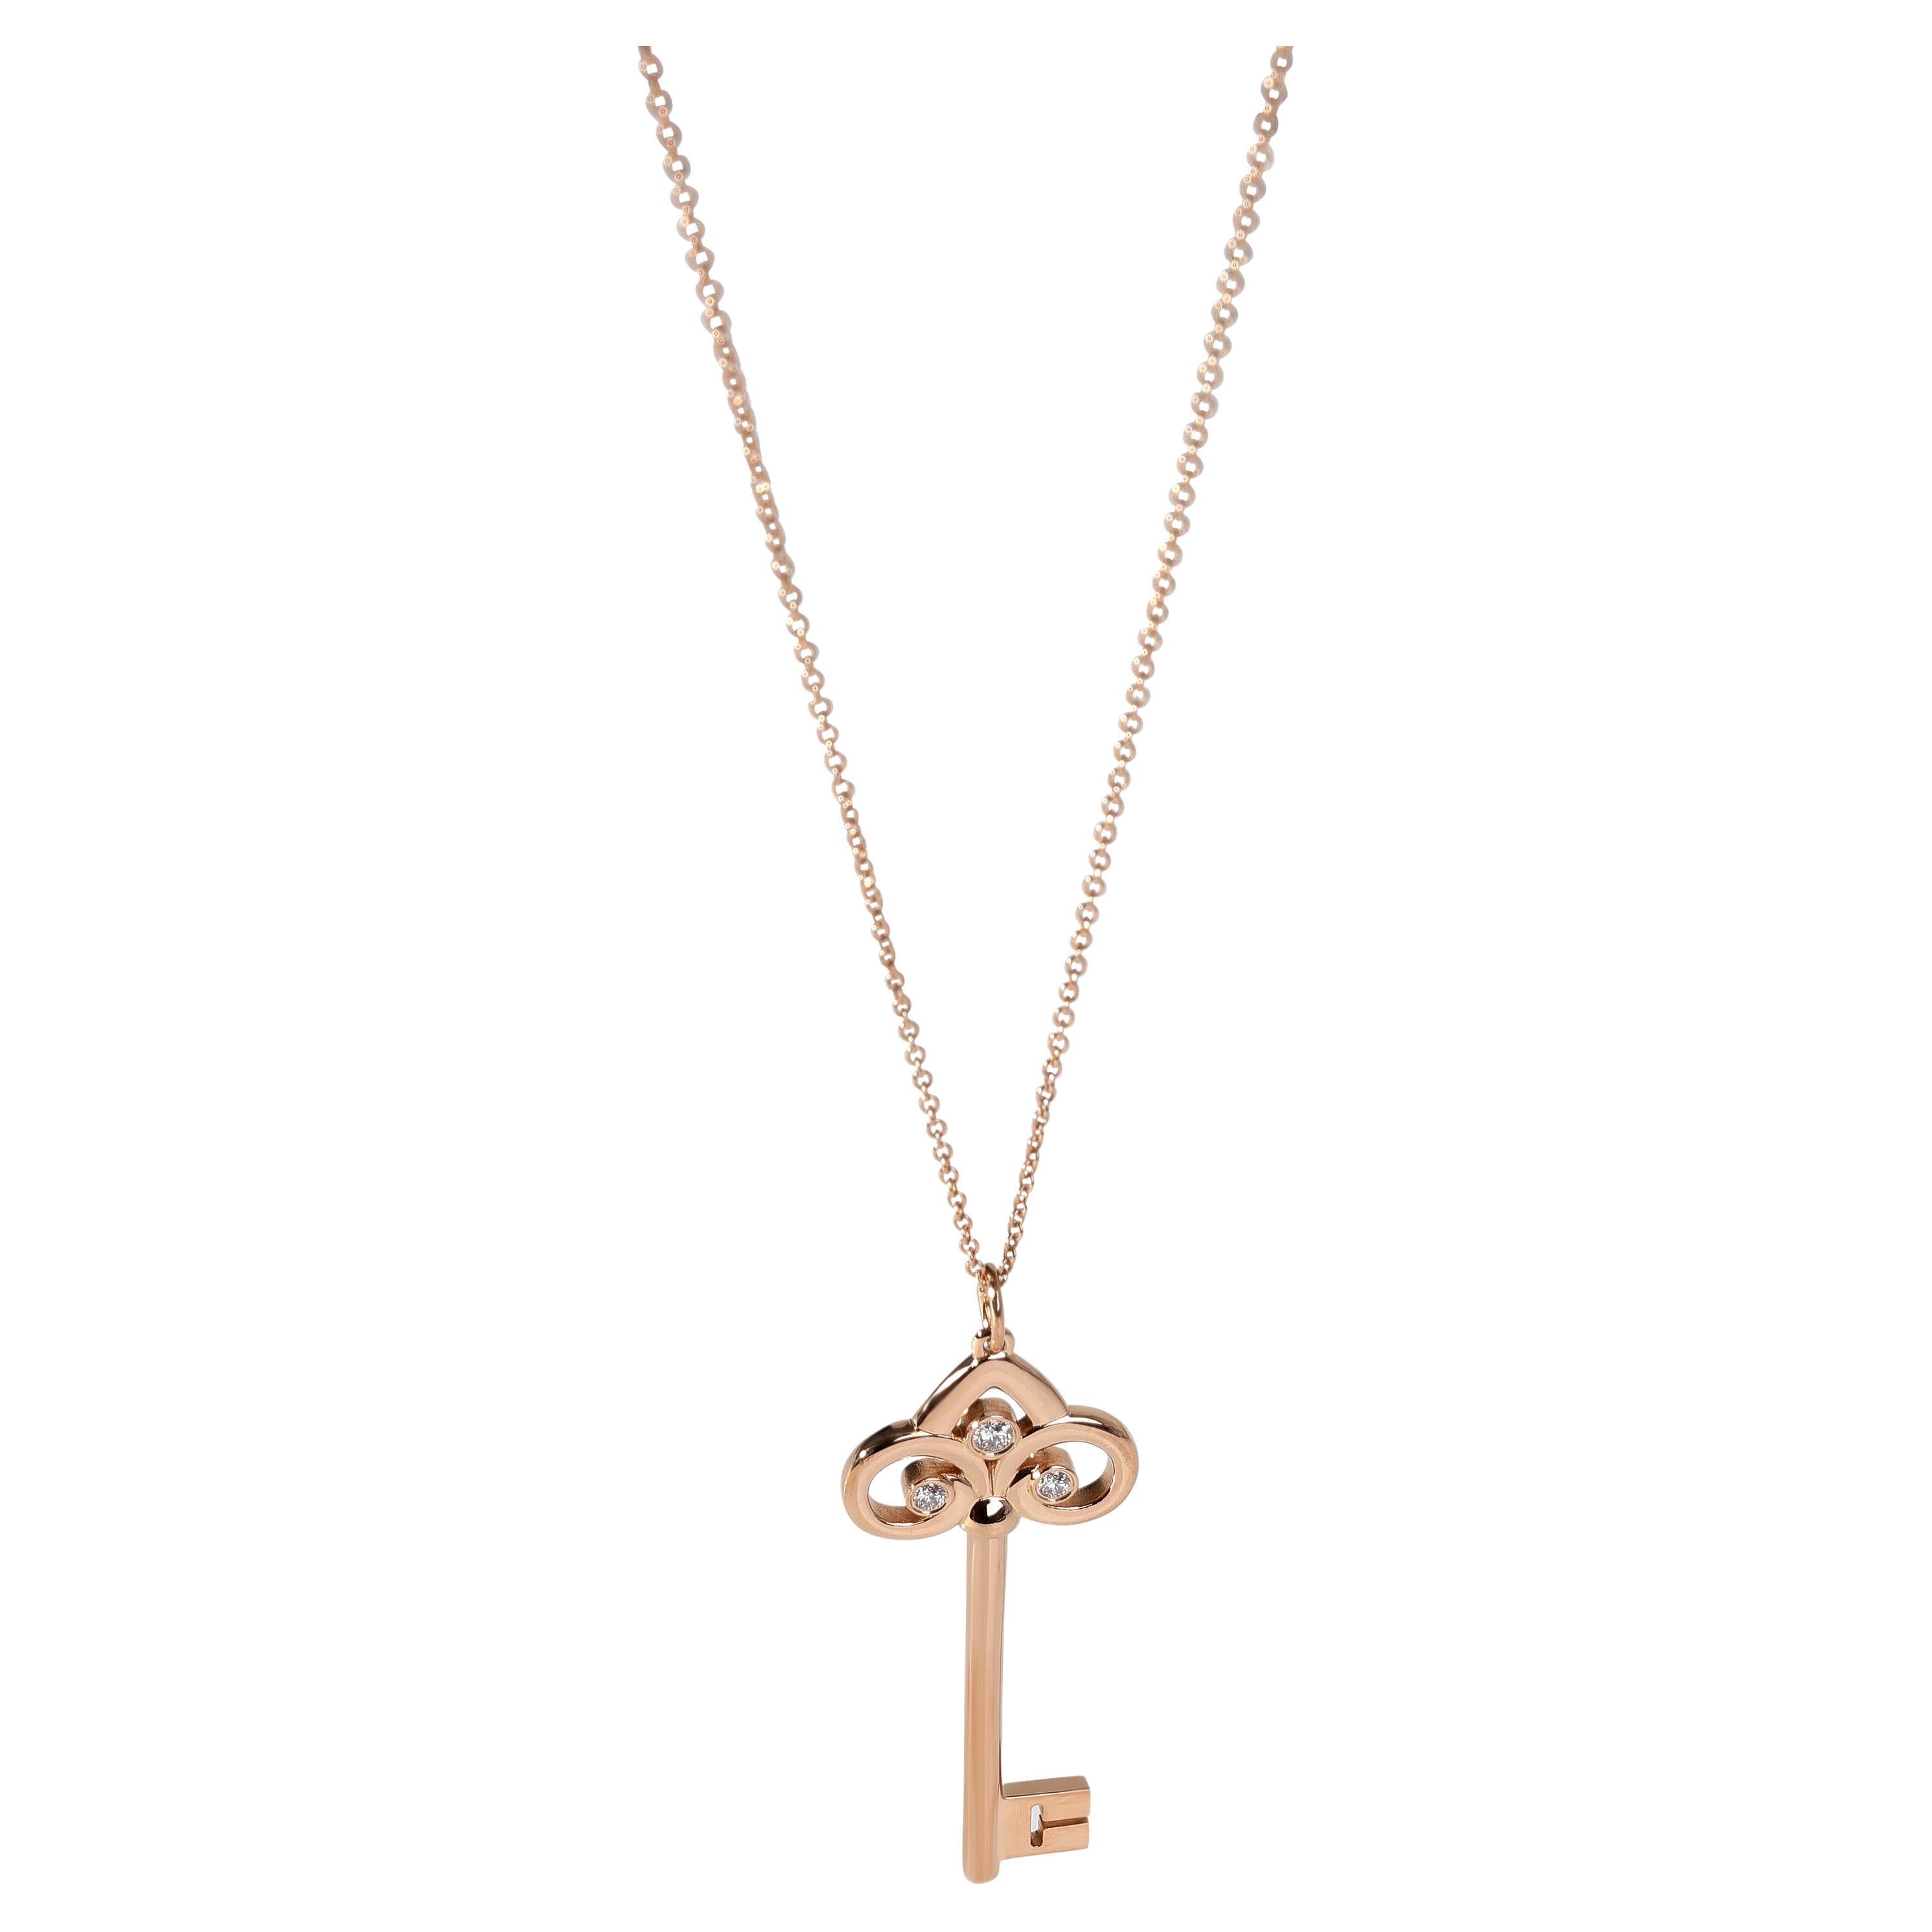 Tiffany & Co. Fleur De Lis Key Pendant in 18k Rose Gold 0.07 Ctw